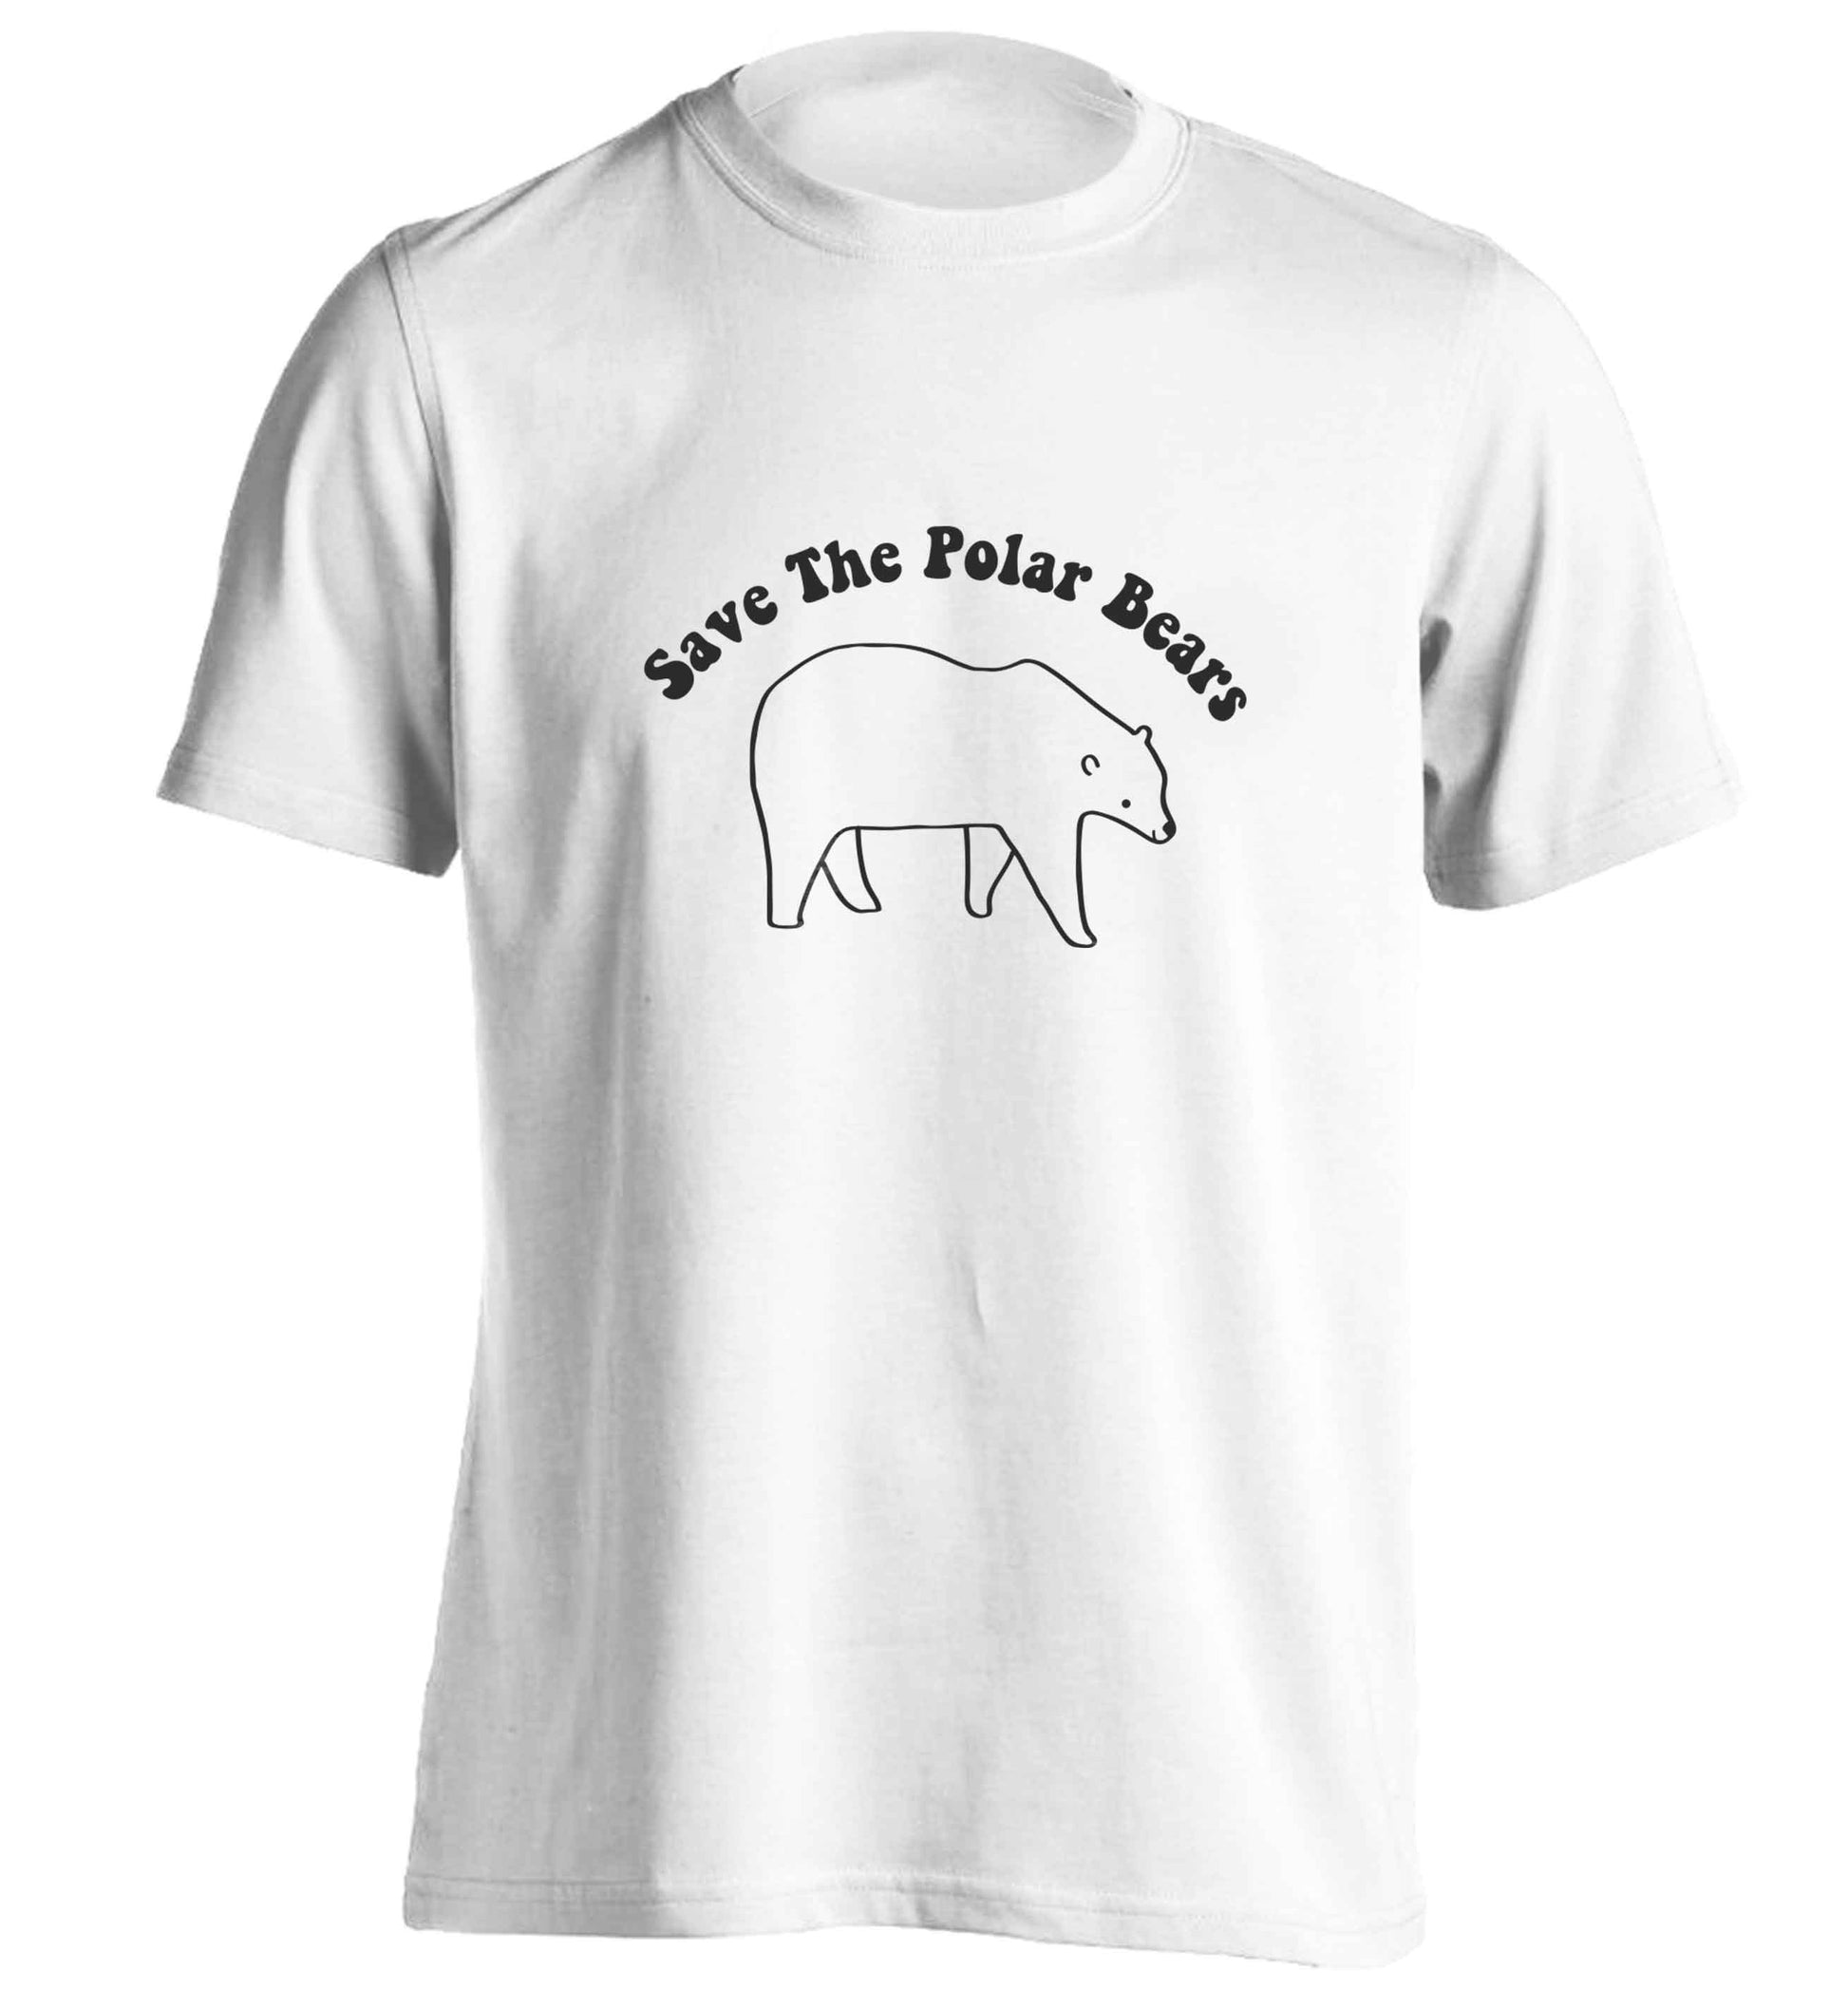 Save The Polar Bears adults unisex white Tshirt 2XL